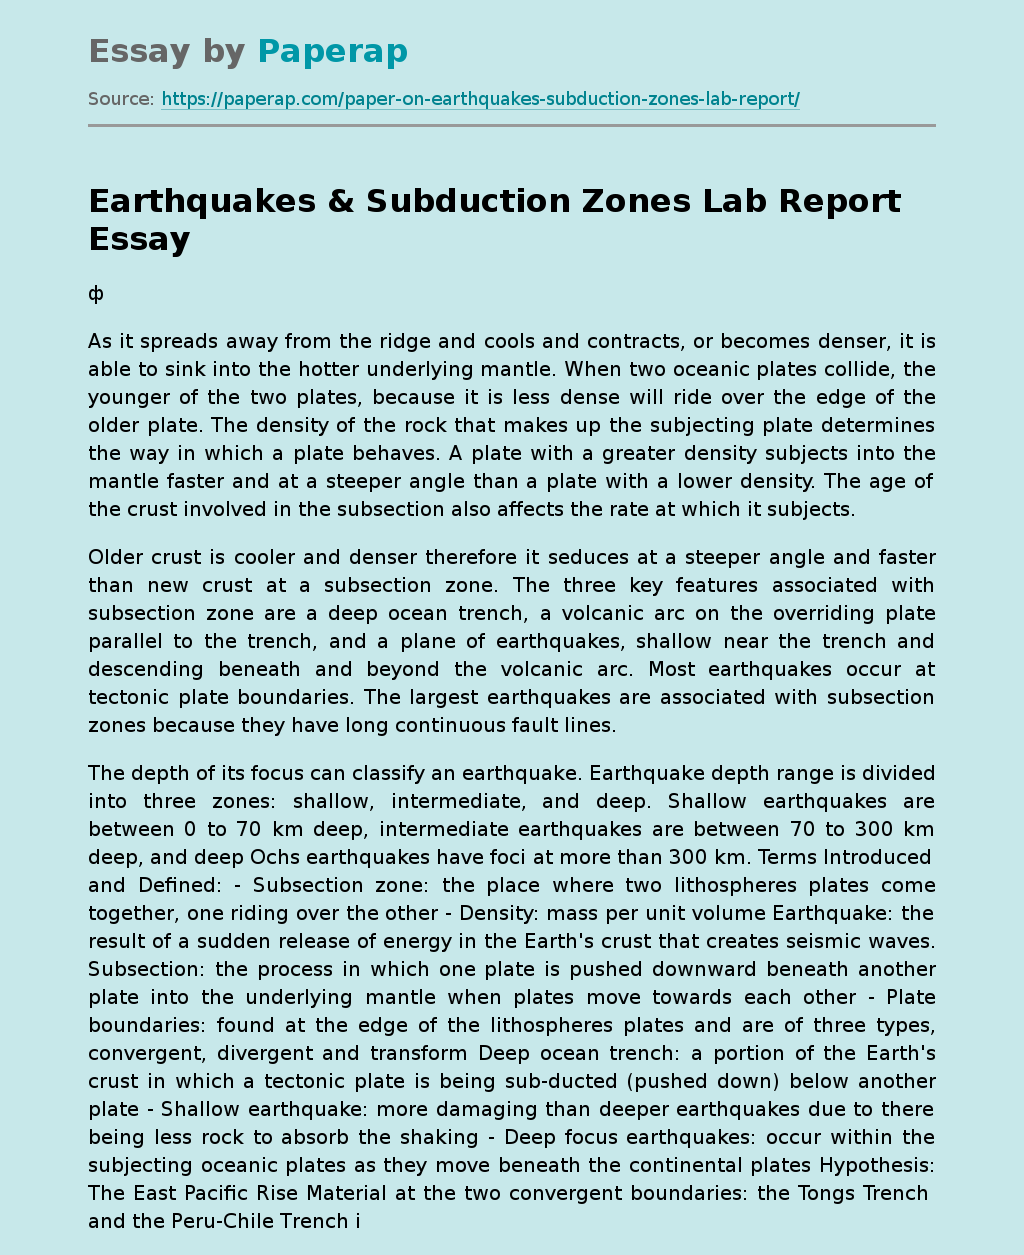 Earthquakes & Subduction Zones Lab Report